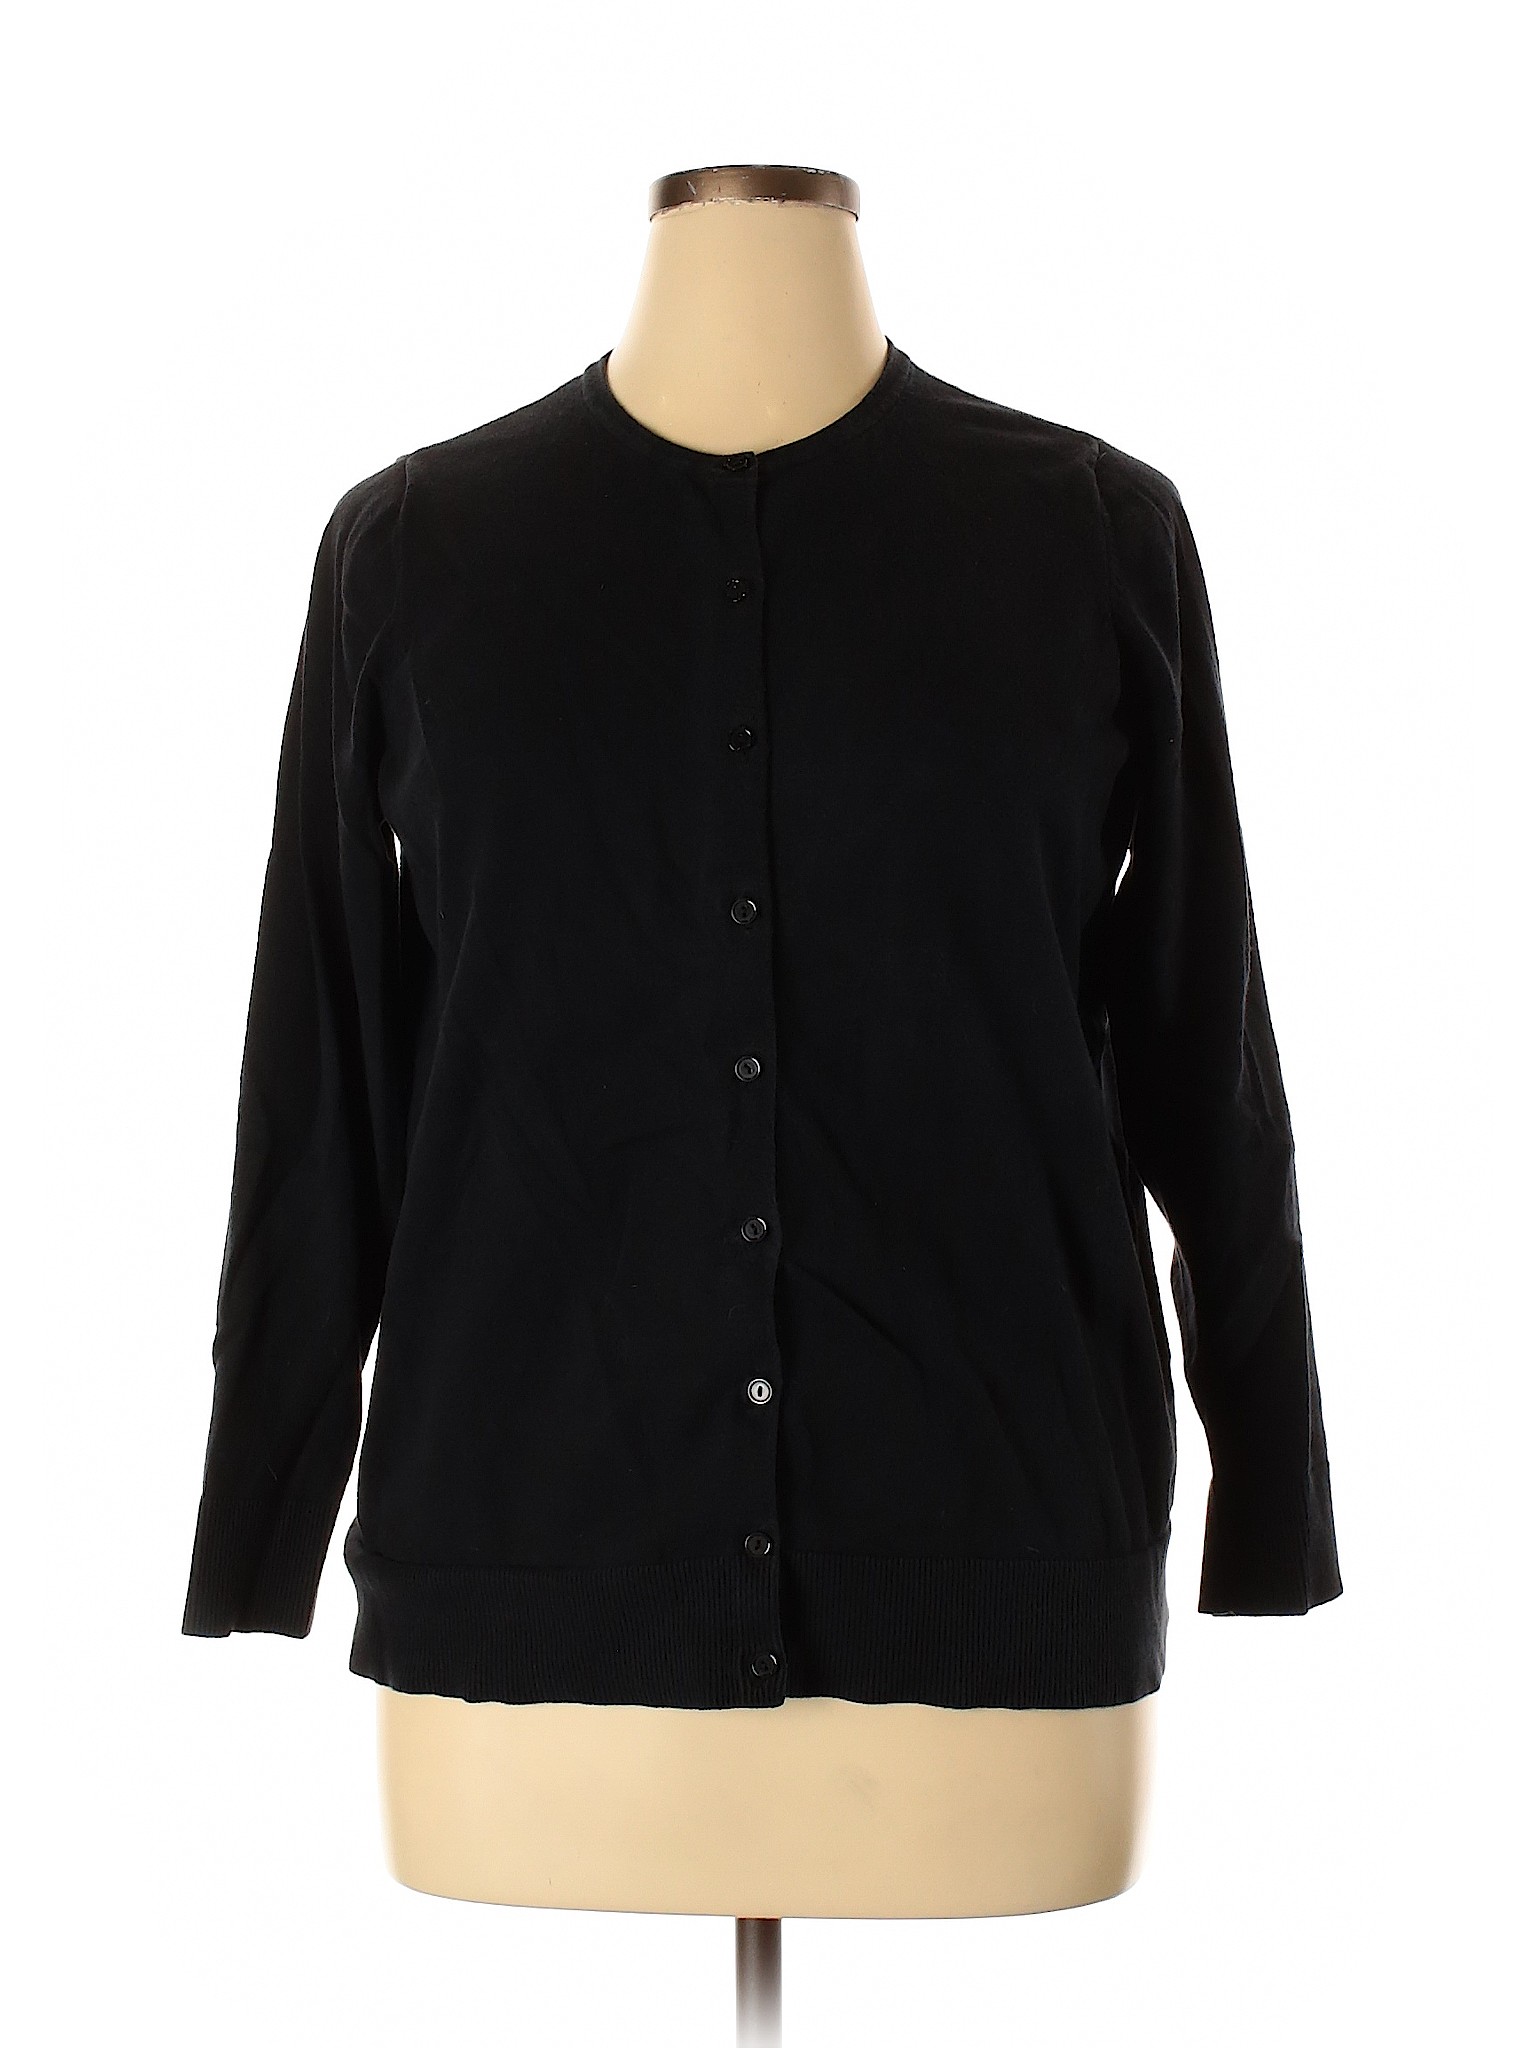 Croft & Barrow Solid Black Cardigan Size 1X (Plus) - 86% off | thredUP